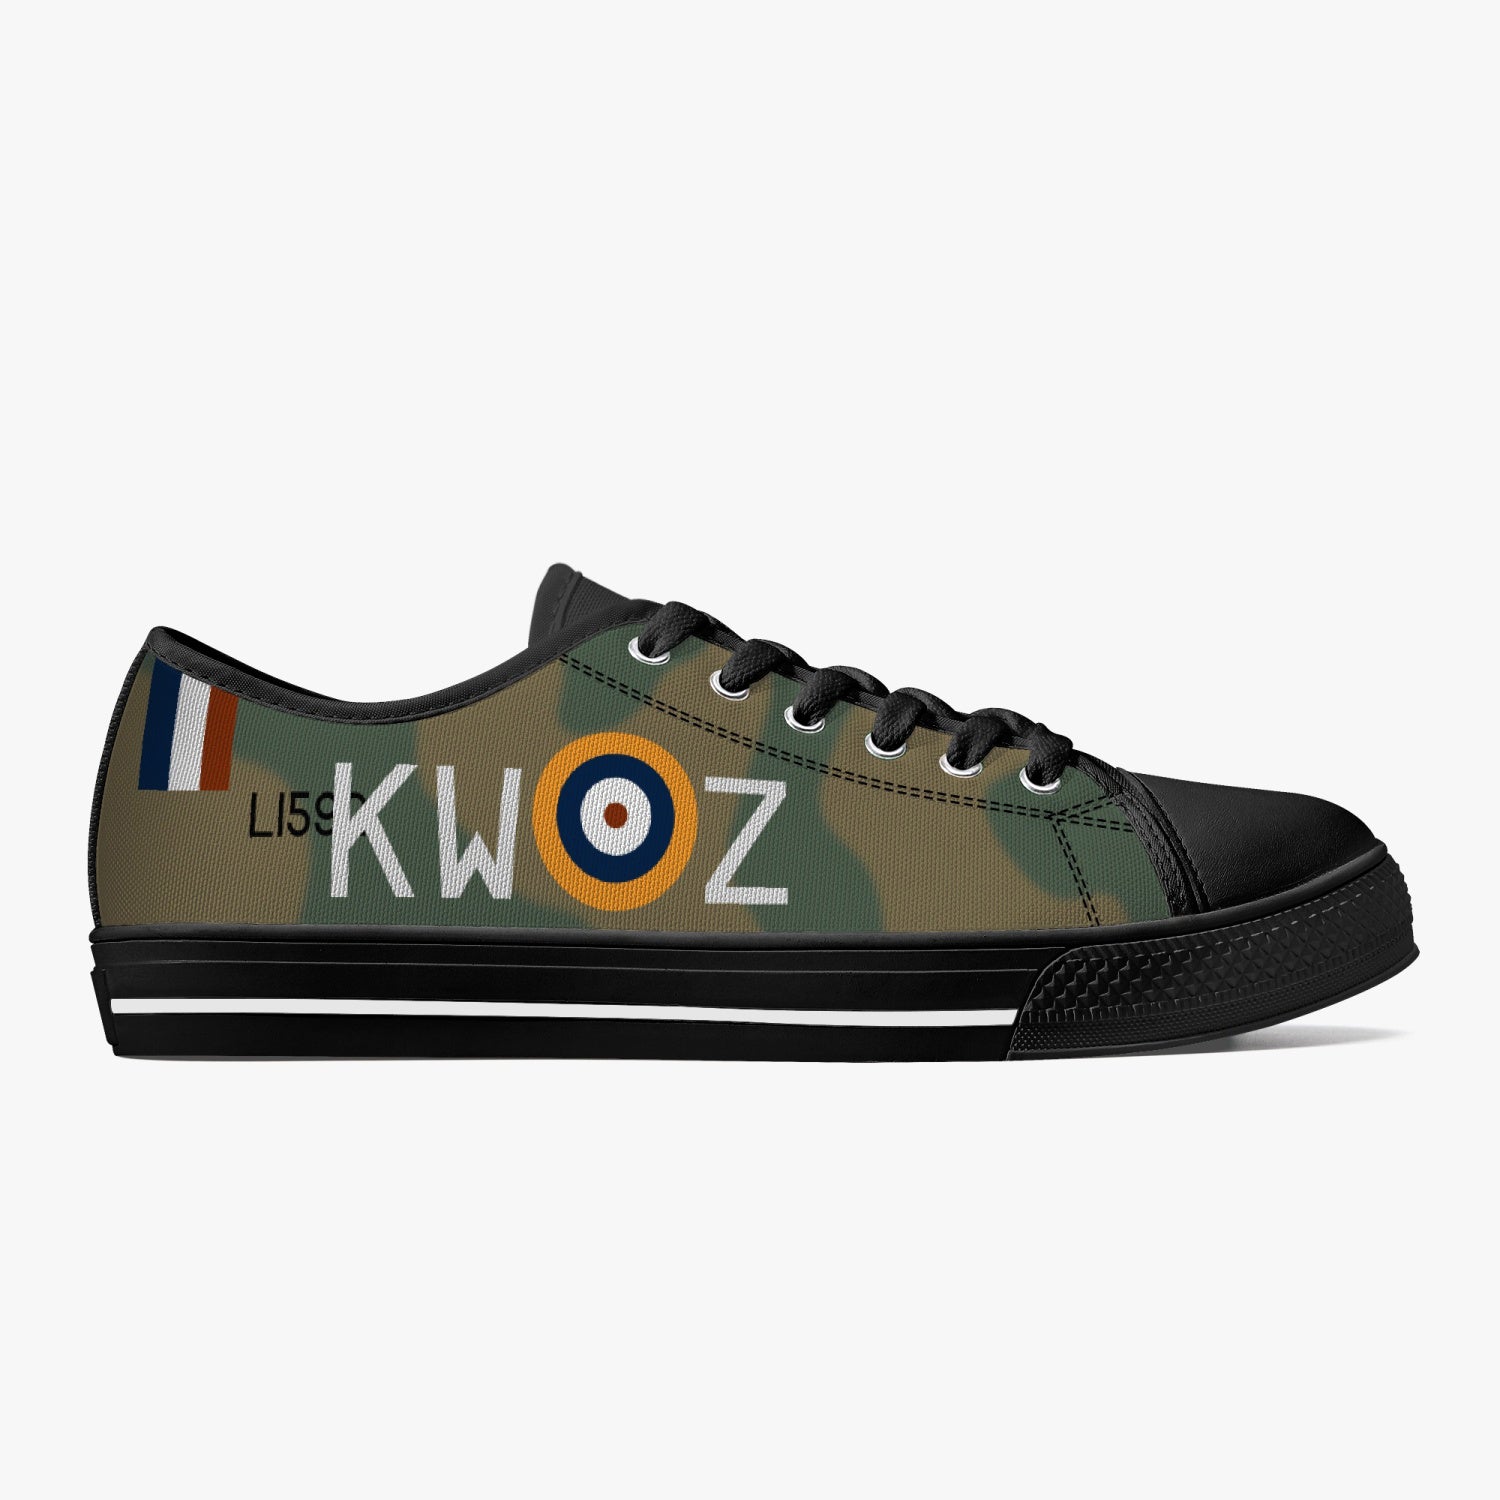 Hurricane "KW-Z" Low Top Canvas Shoes - I Love a Hangar